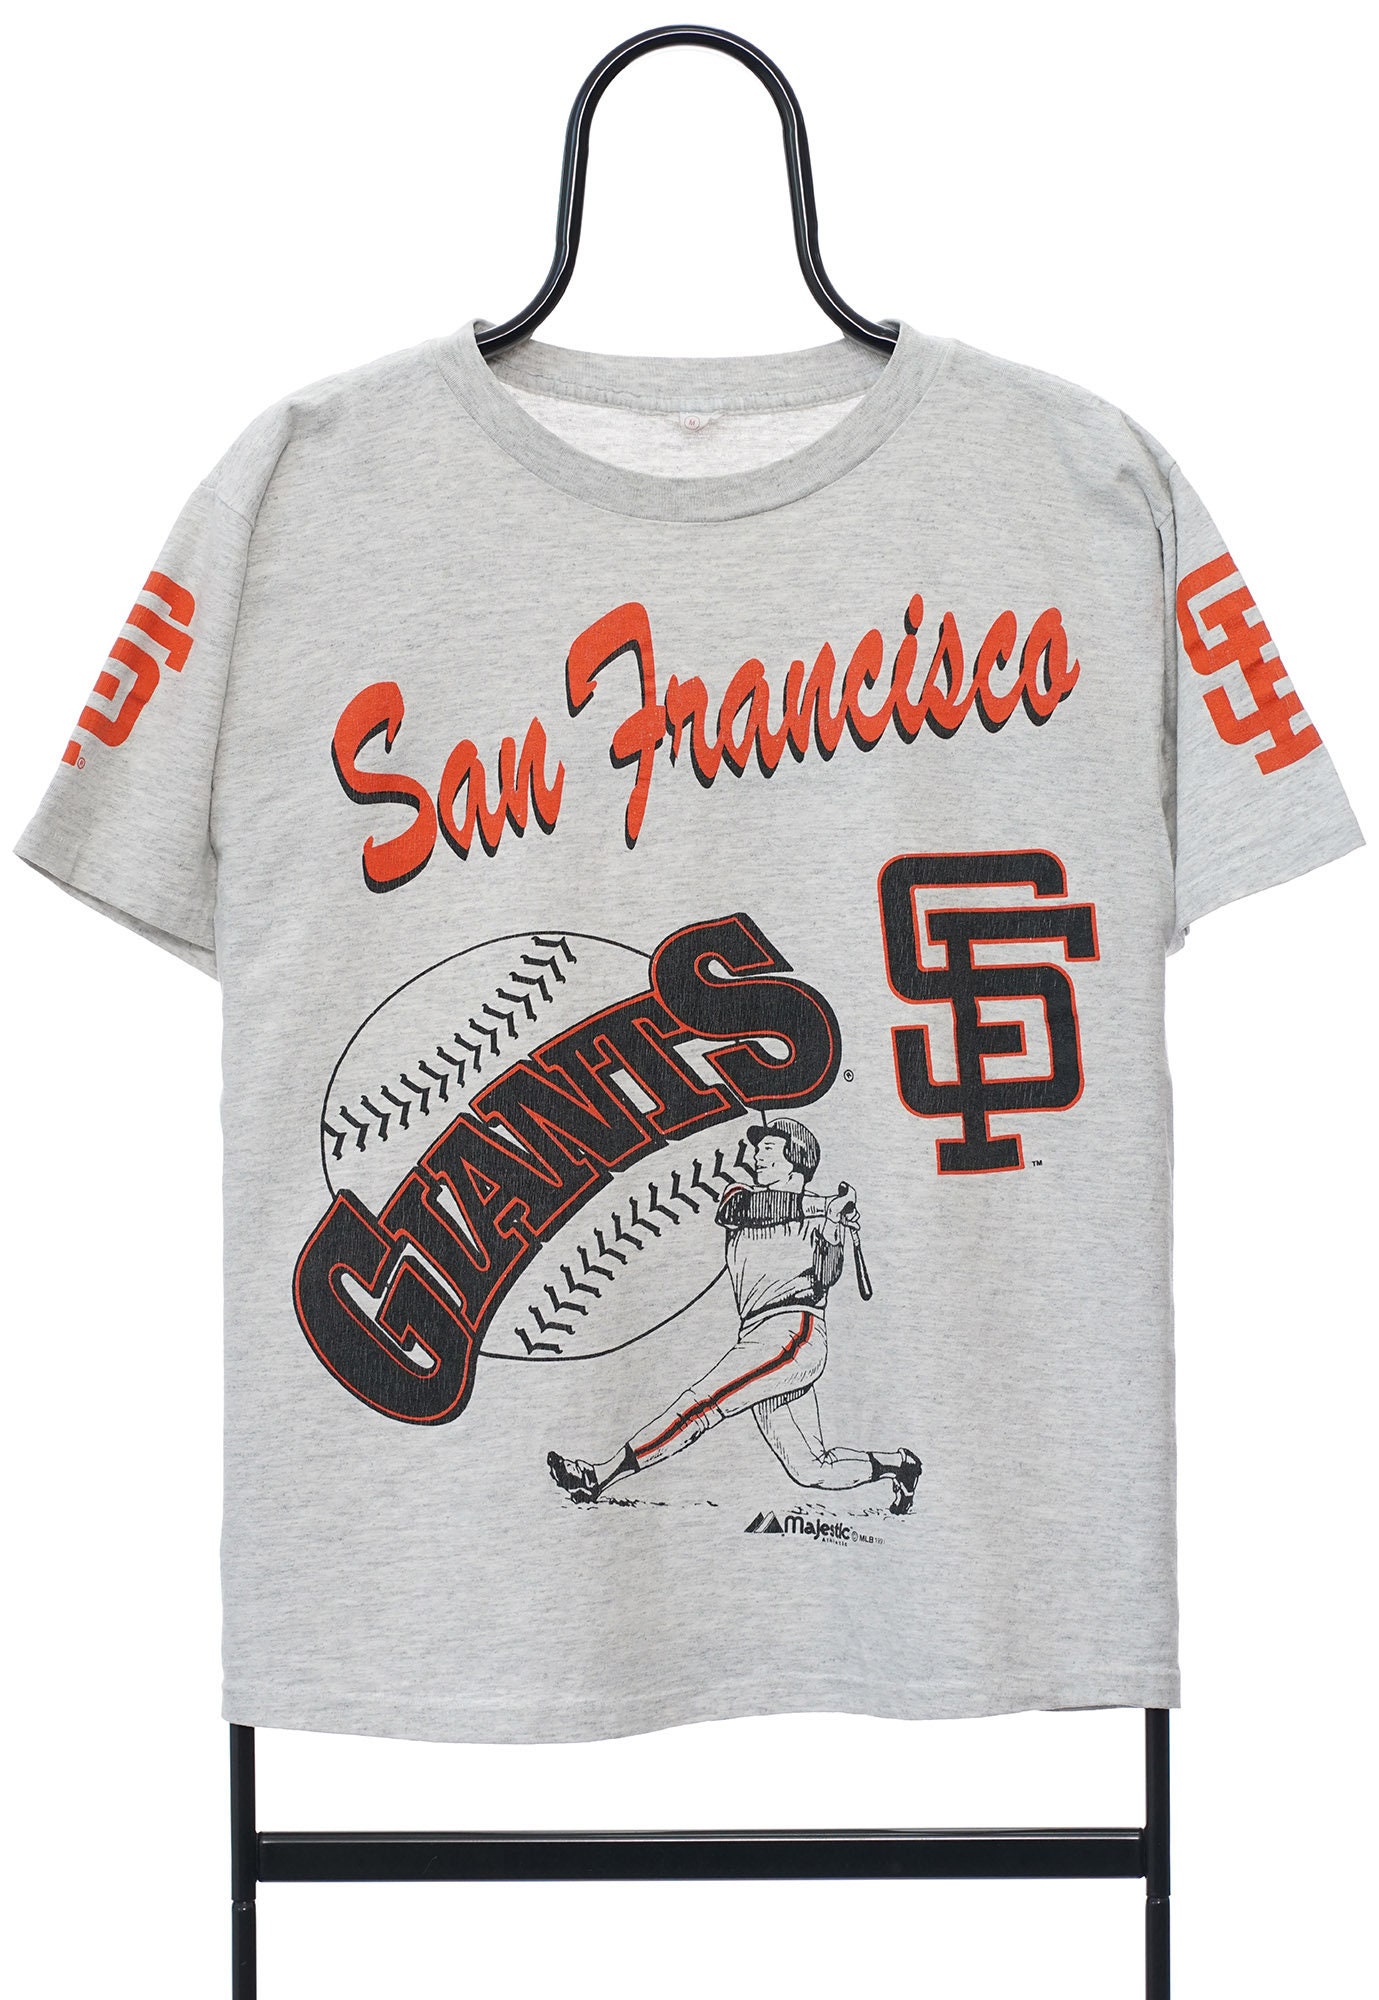 San Francisco Giants Fuck The Dodgers Shirt, Tshirt, Hoodie, Sweatshirt,  Long Sleeve, Youth, funny shirts, gift shirts, Graphic Tee » Cool Gifts for  You - Mfamilygift